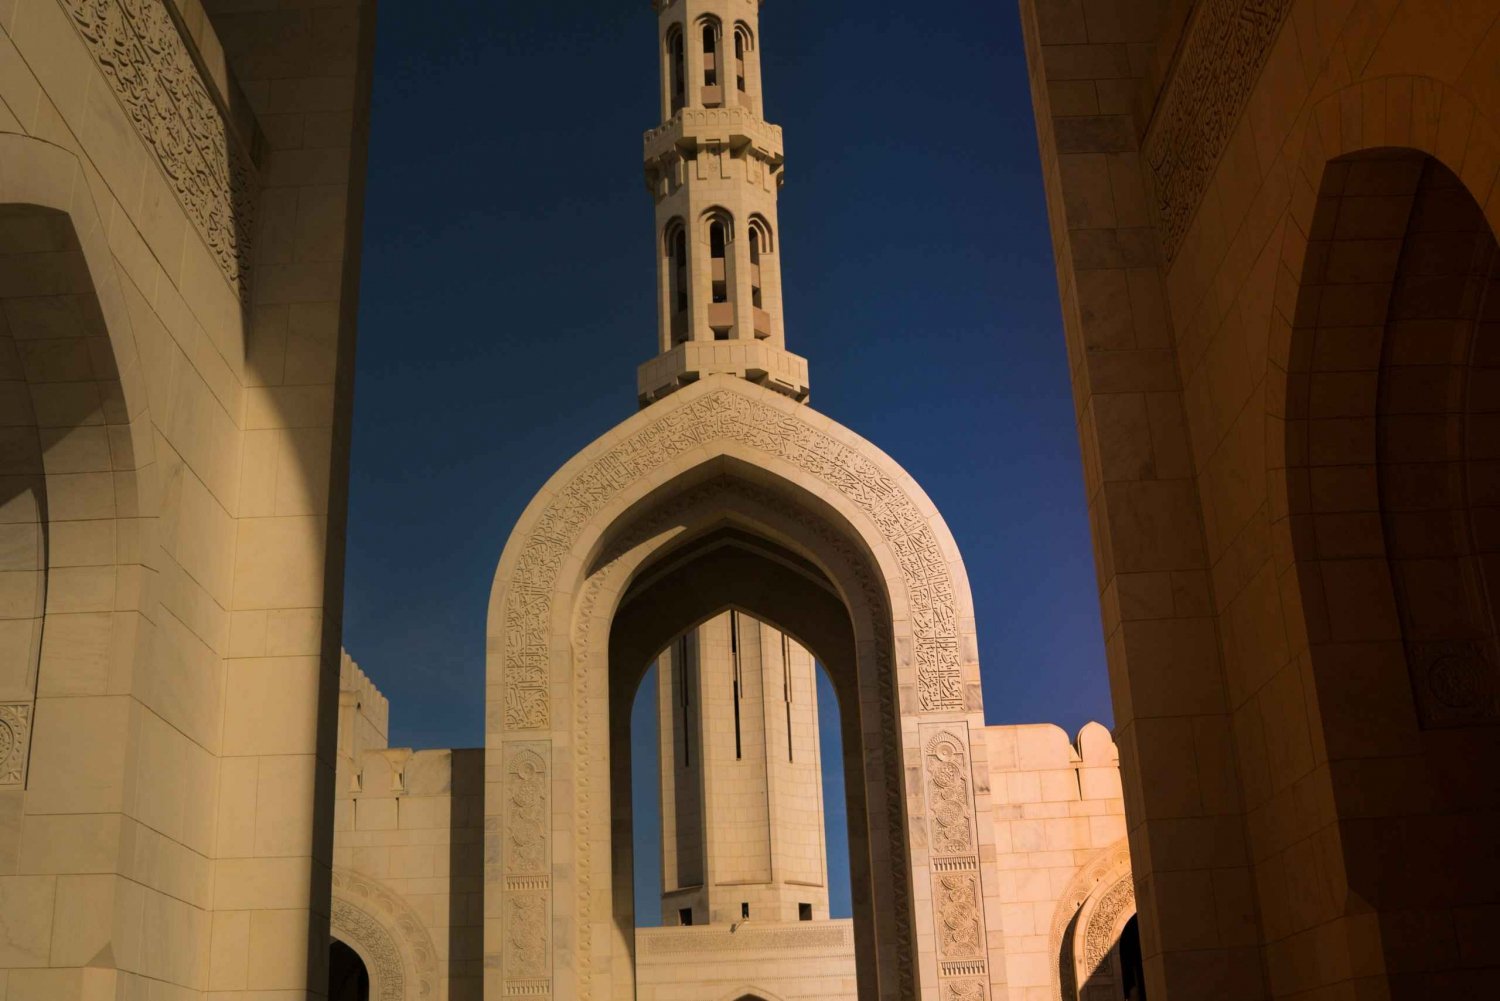 Tour panoramico notturno di Muscat